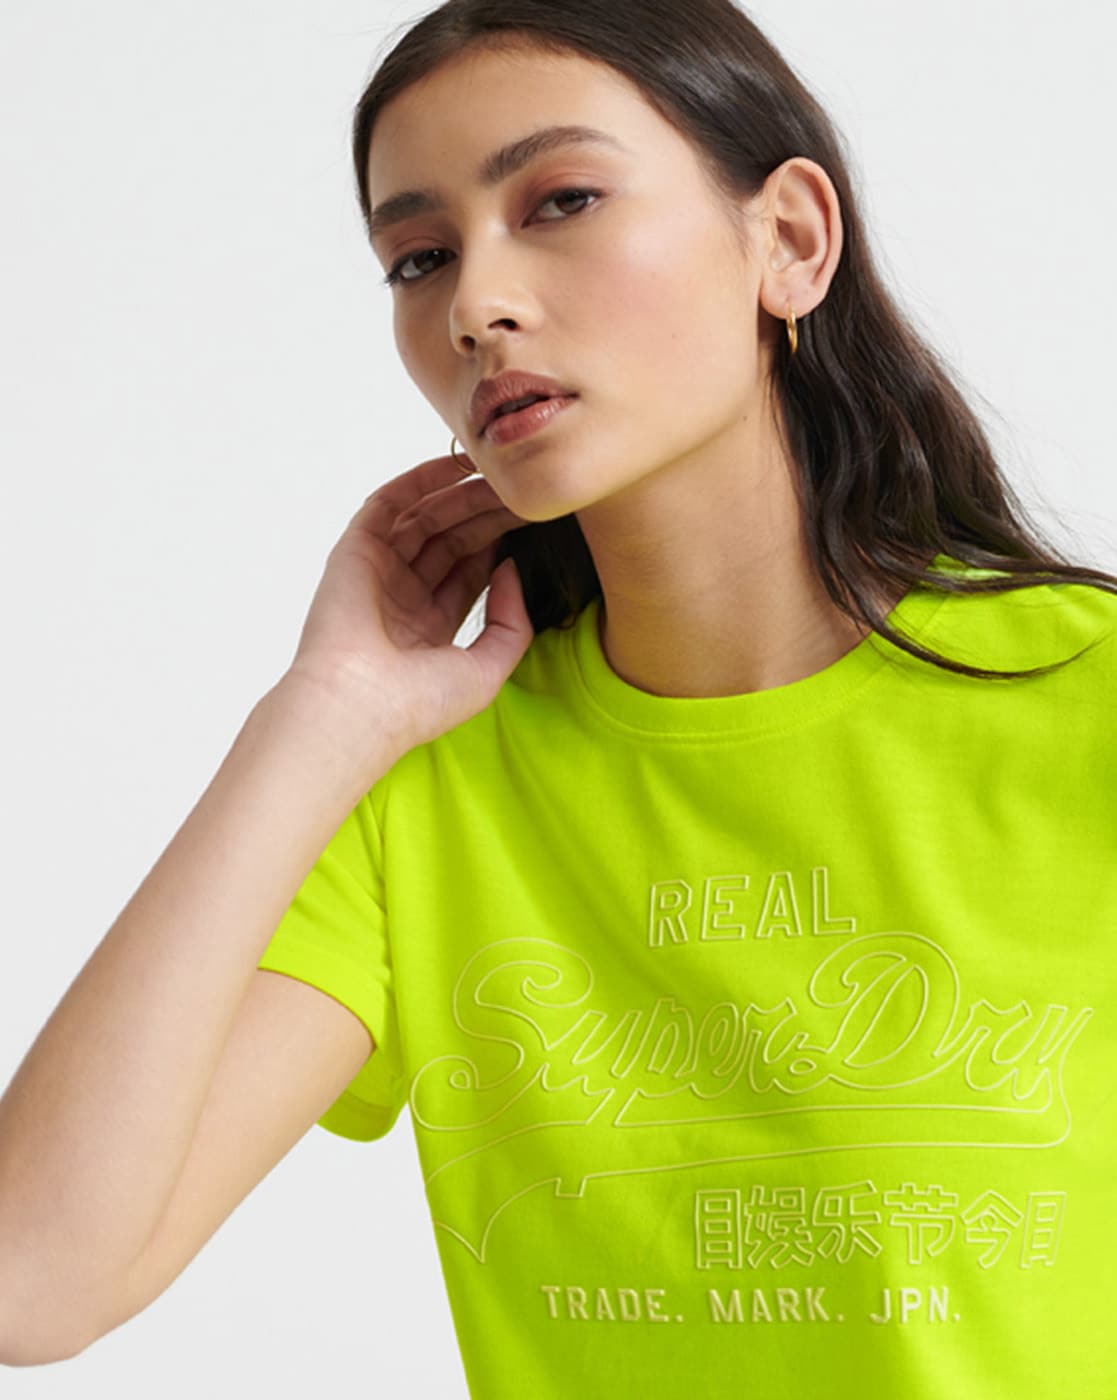 Buy > neon green shirts > in stock